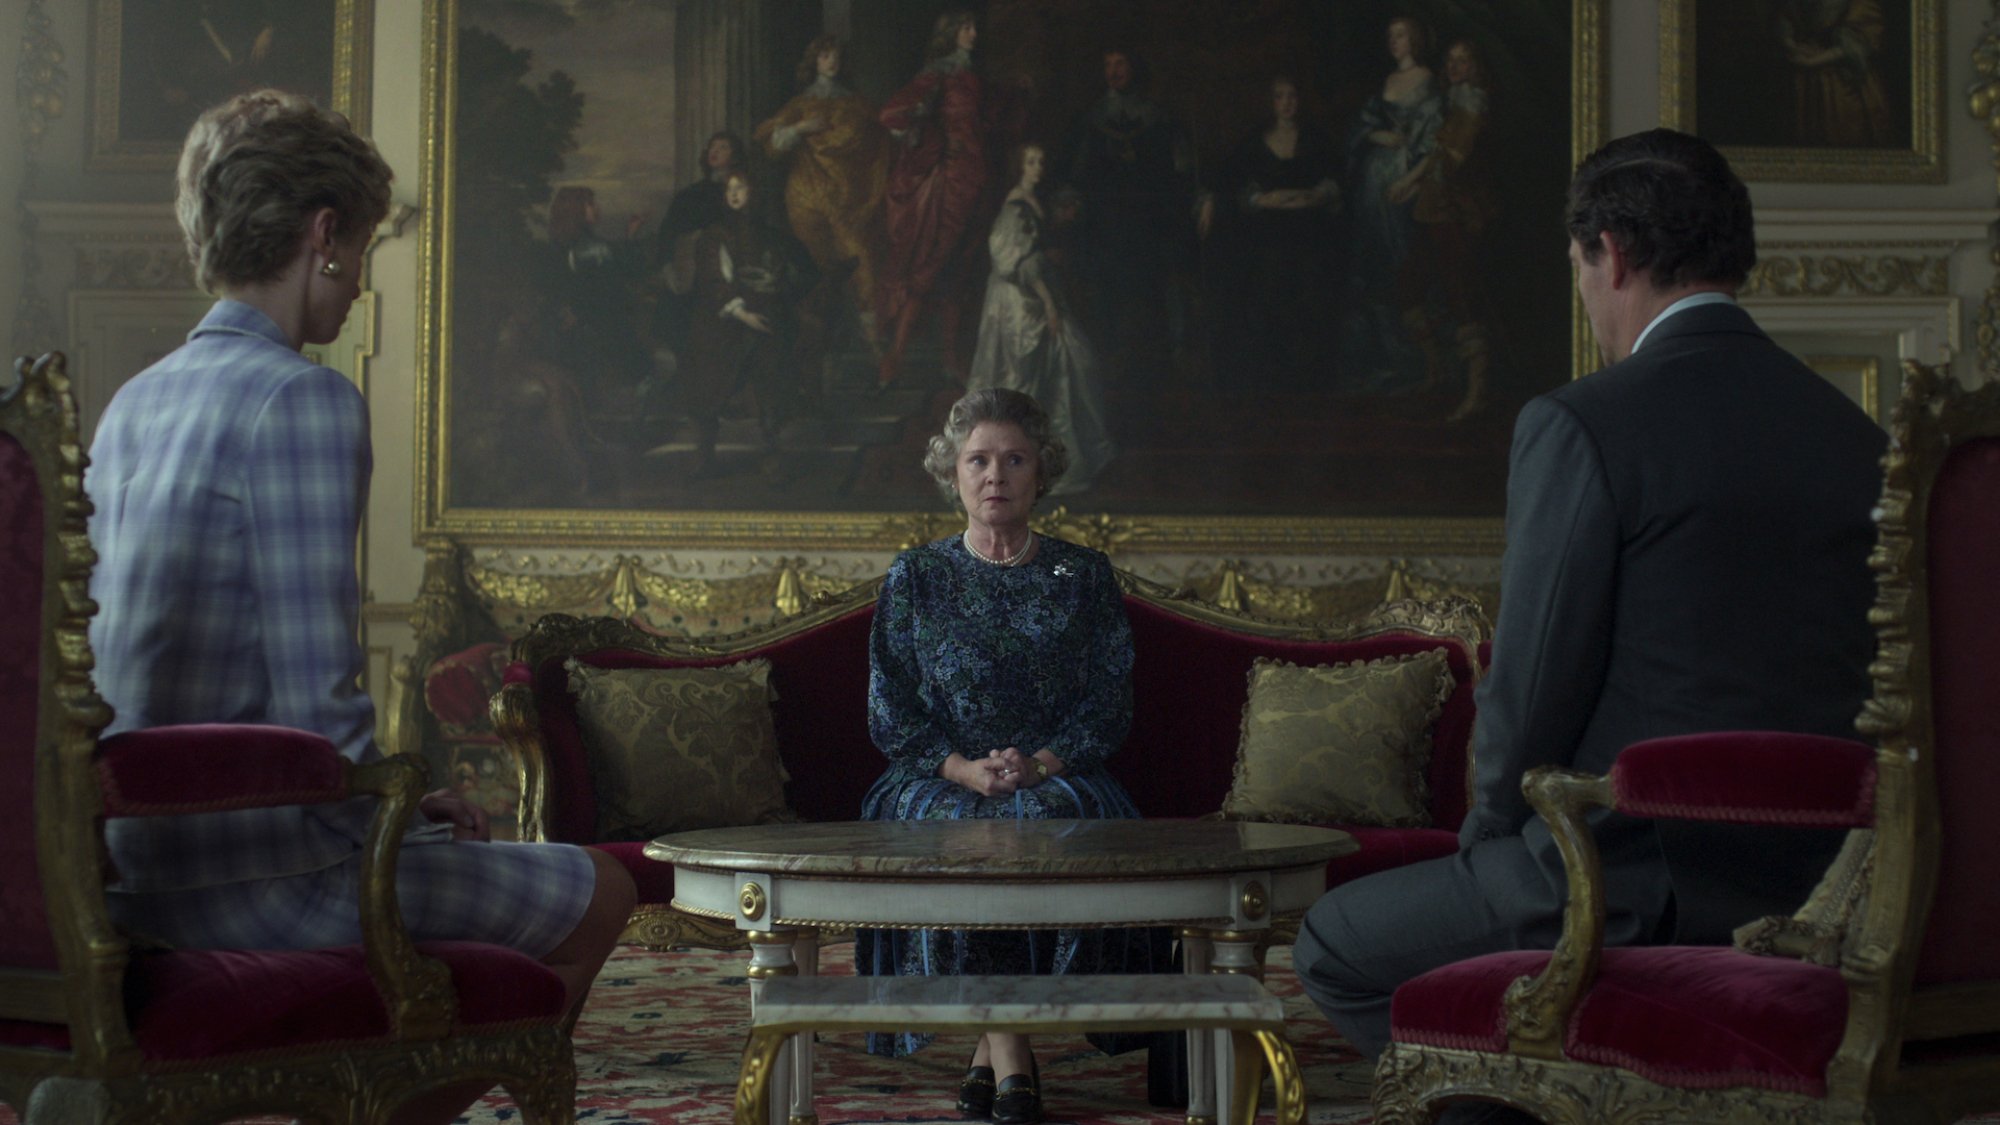 An actor resembling Queen Elizabeth II sits between actors resembling Charles and Diana.